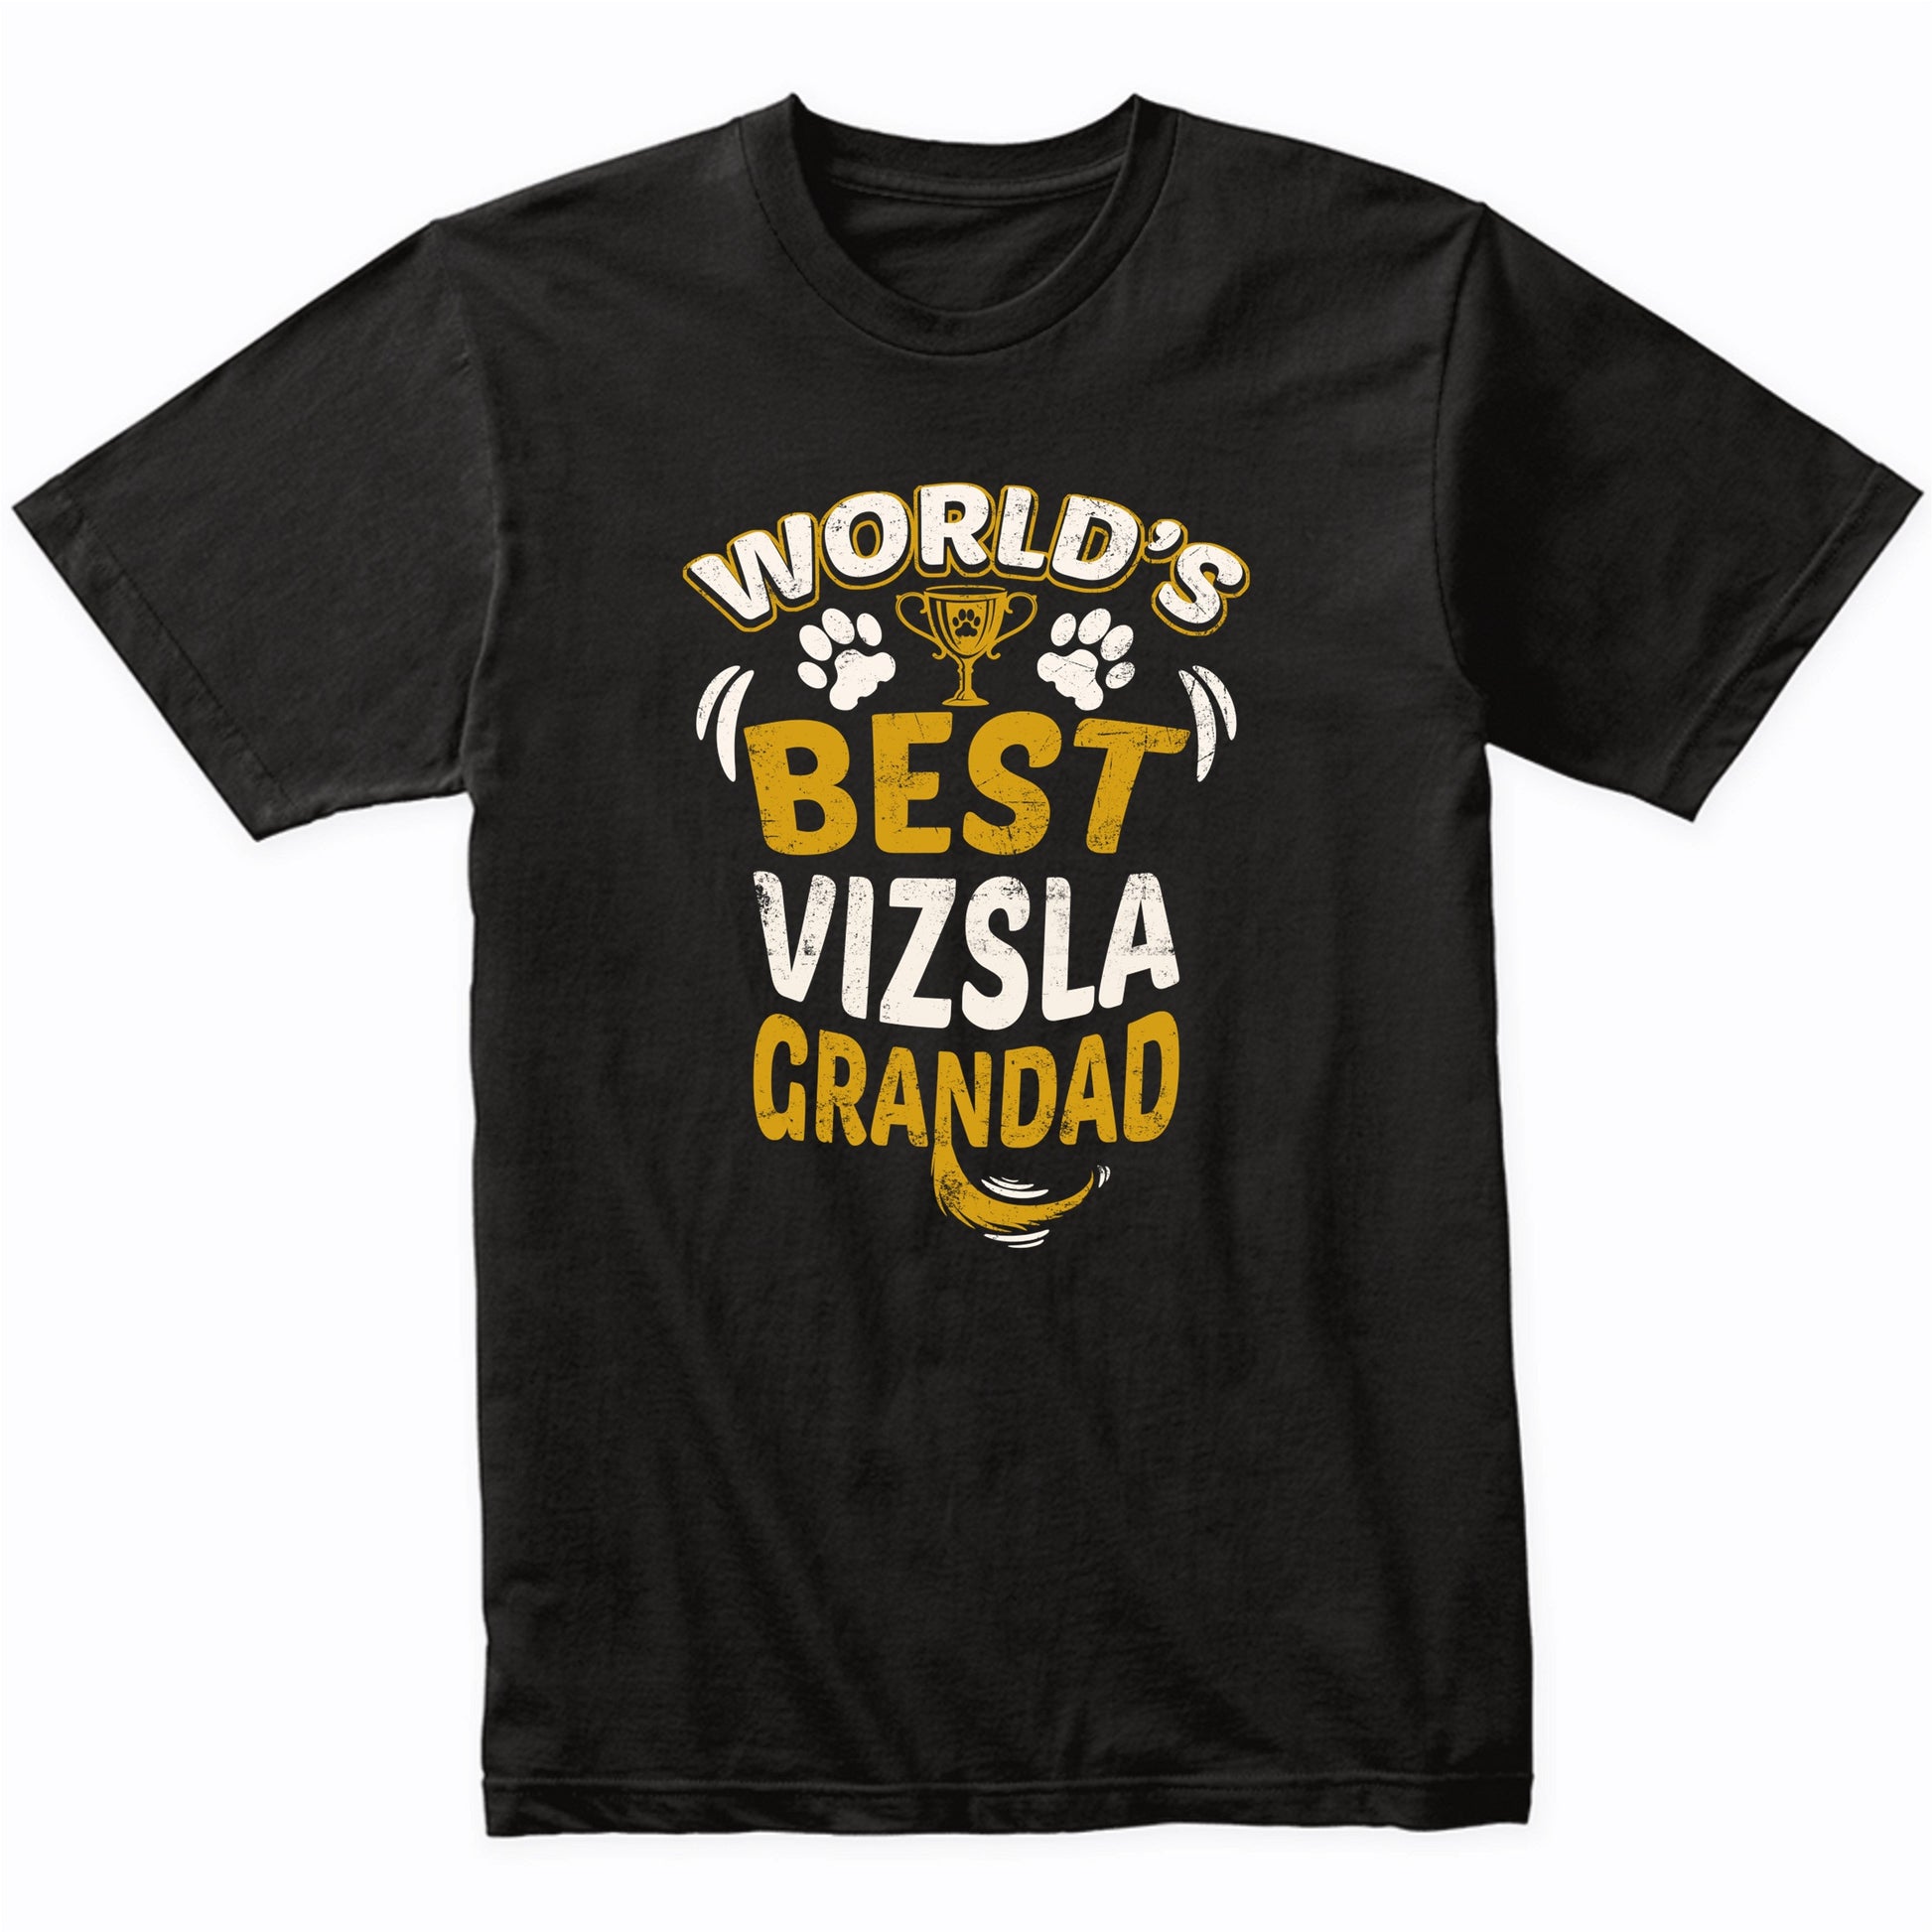 World's Best Vizsla Grandad Graphic T-Shirt